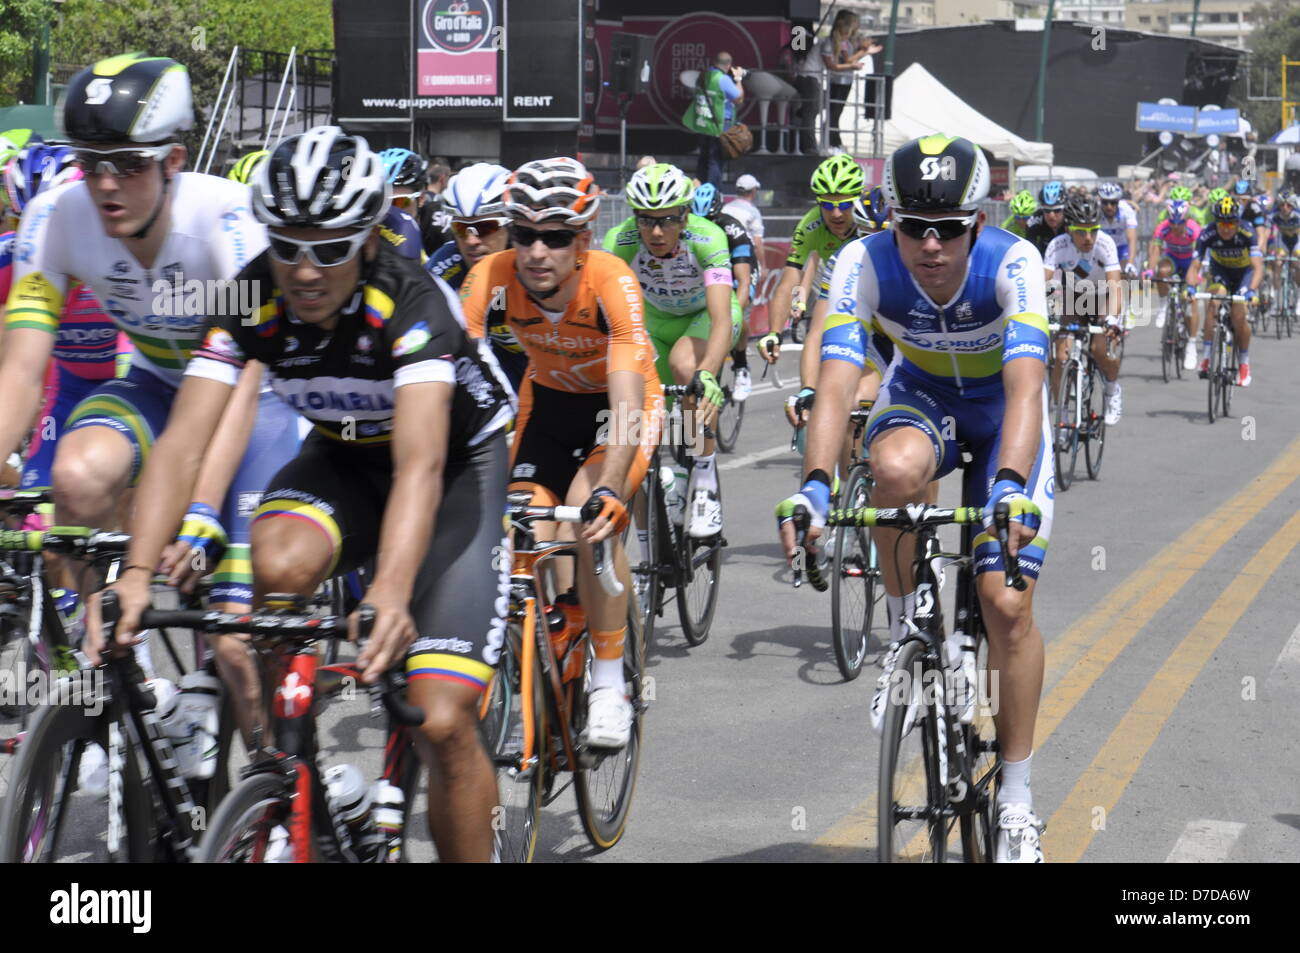 Neapel, Italien. 4. Mai 2013. Profi-Biker racing den ersten Tag des Giro d ' Italia am 4. Mai 2013 in Neapel. Bildnachweis: Enrico Della Pietra / Alamy Live News Stockfoto